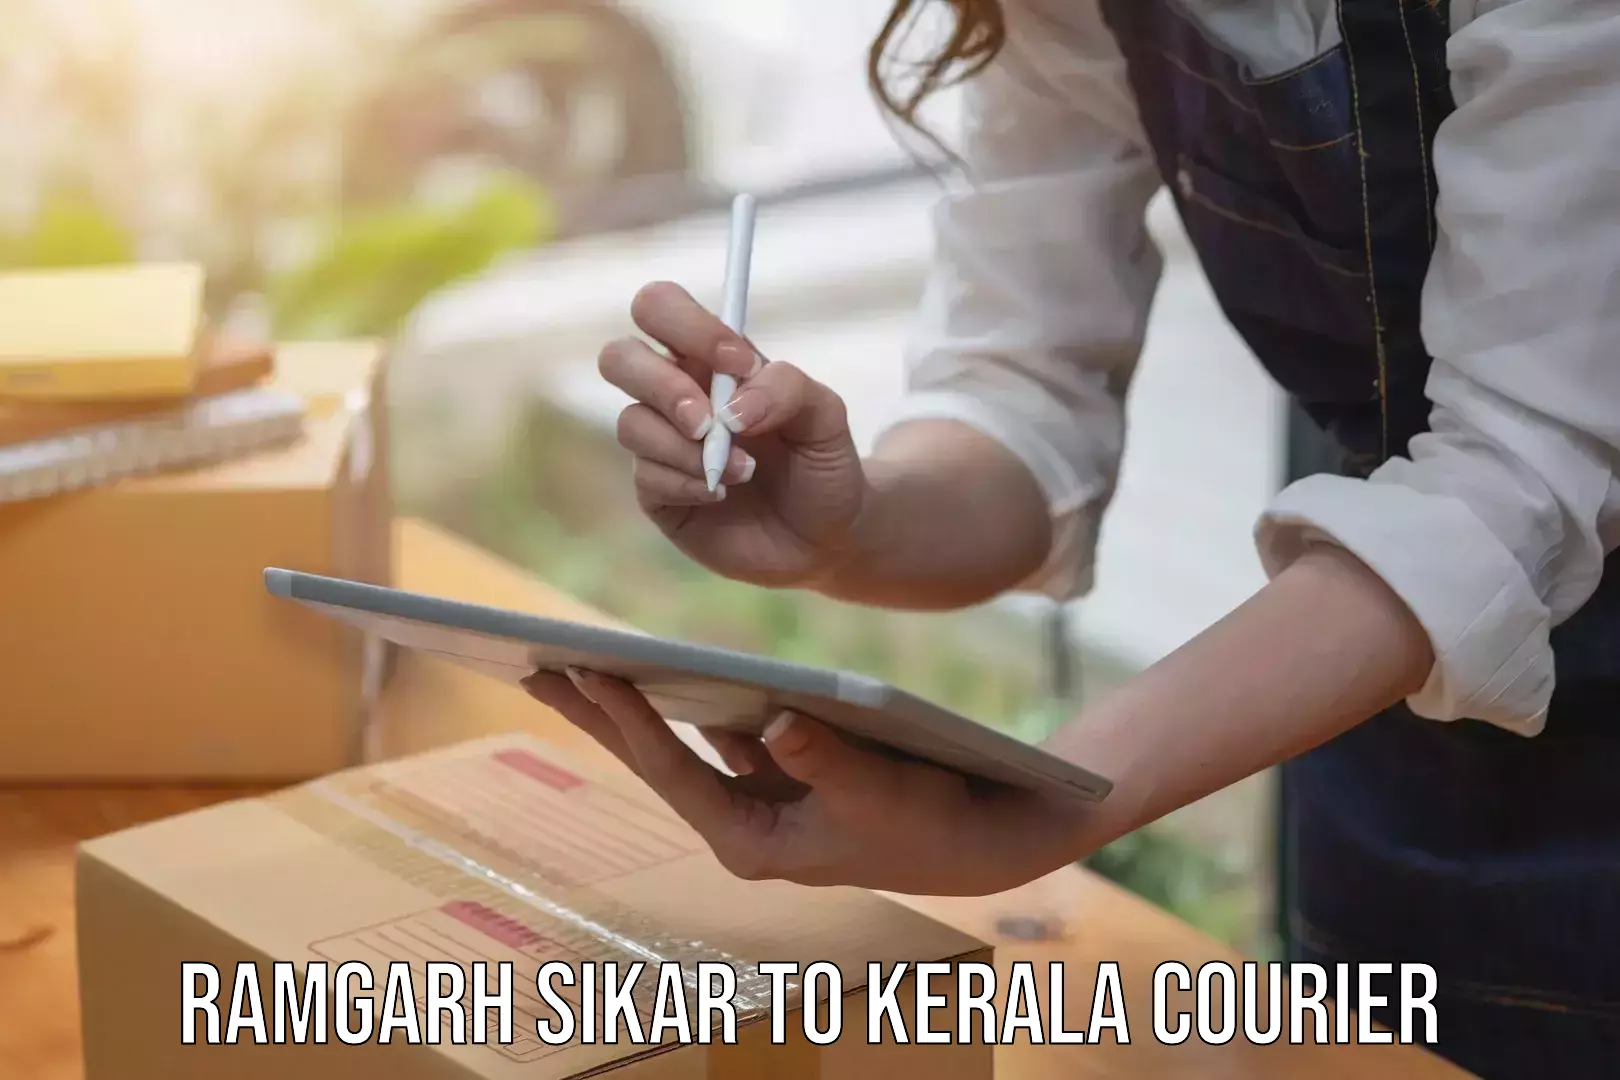 State-of-the-art courier technology Ramgarh Sikar to Kallikkad